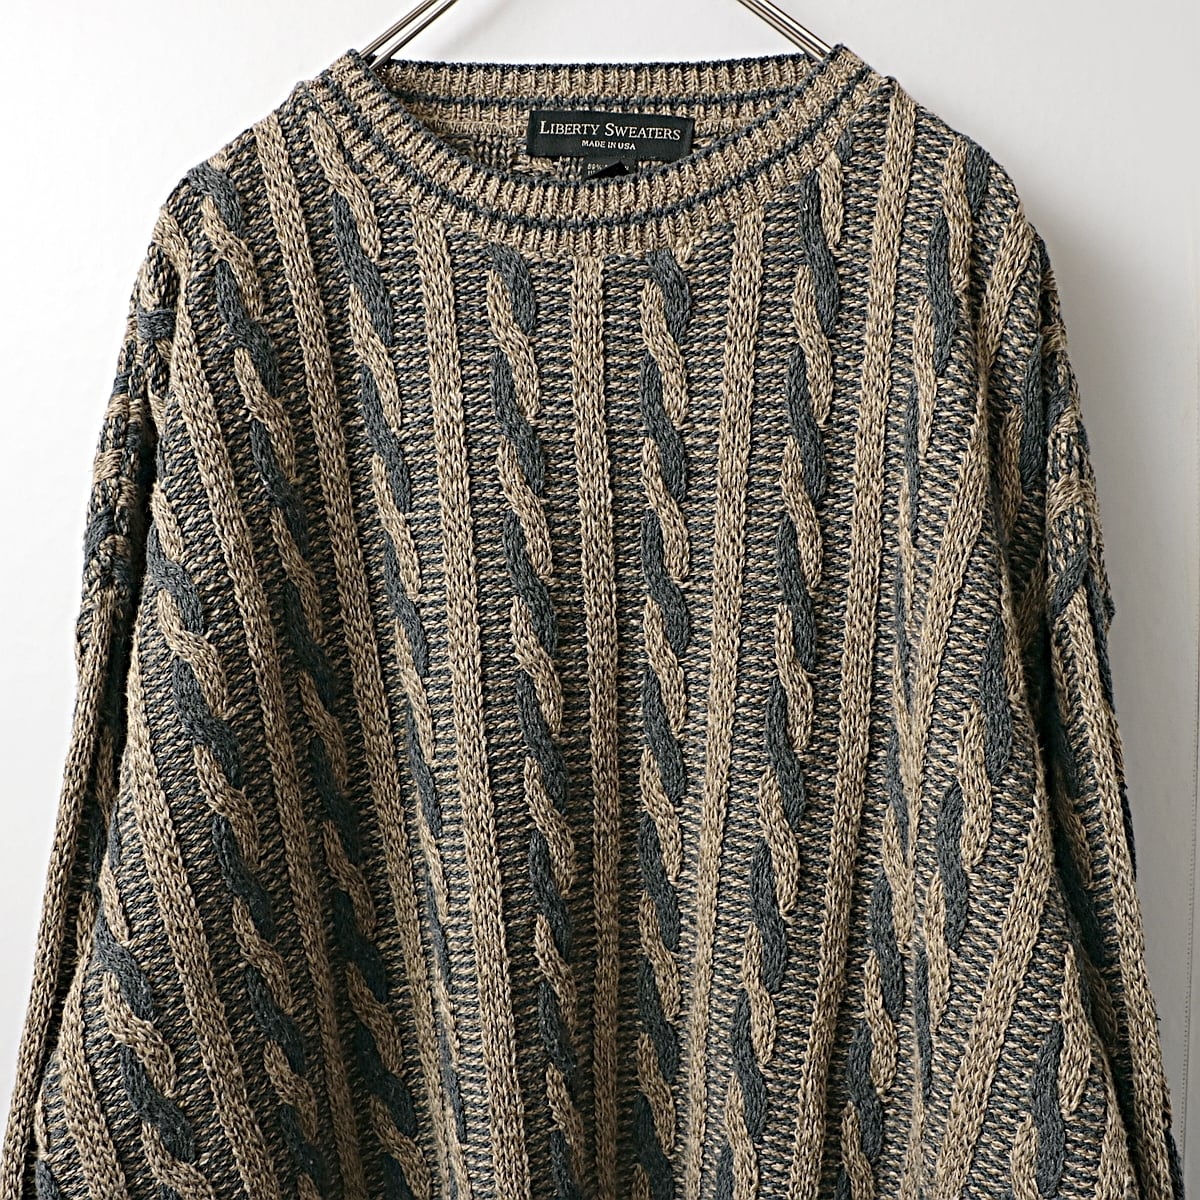 90s Liberty Sweaters usa製 2color ケーブル コットン ニット